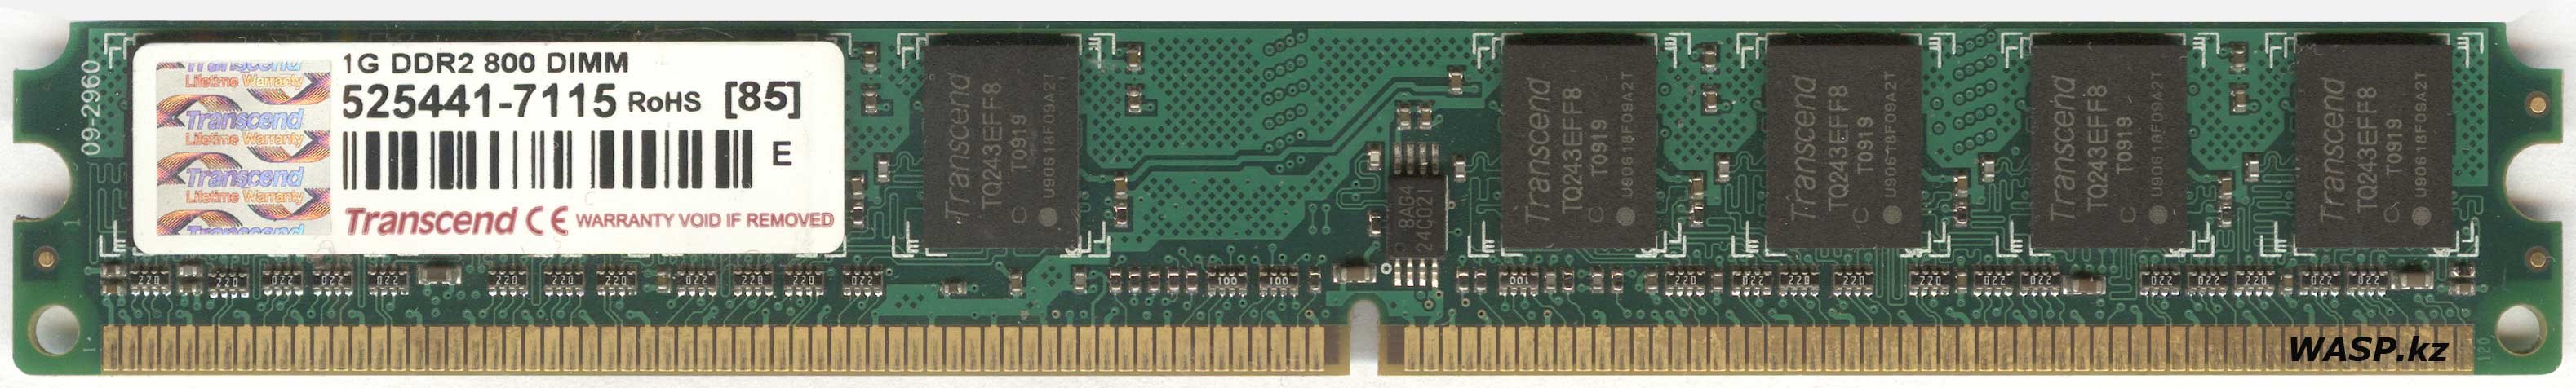 Transcend 1G DDR2 800 DIMM старая память 2009 года низкопрофильная обзор